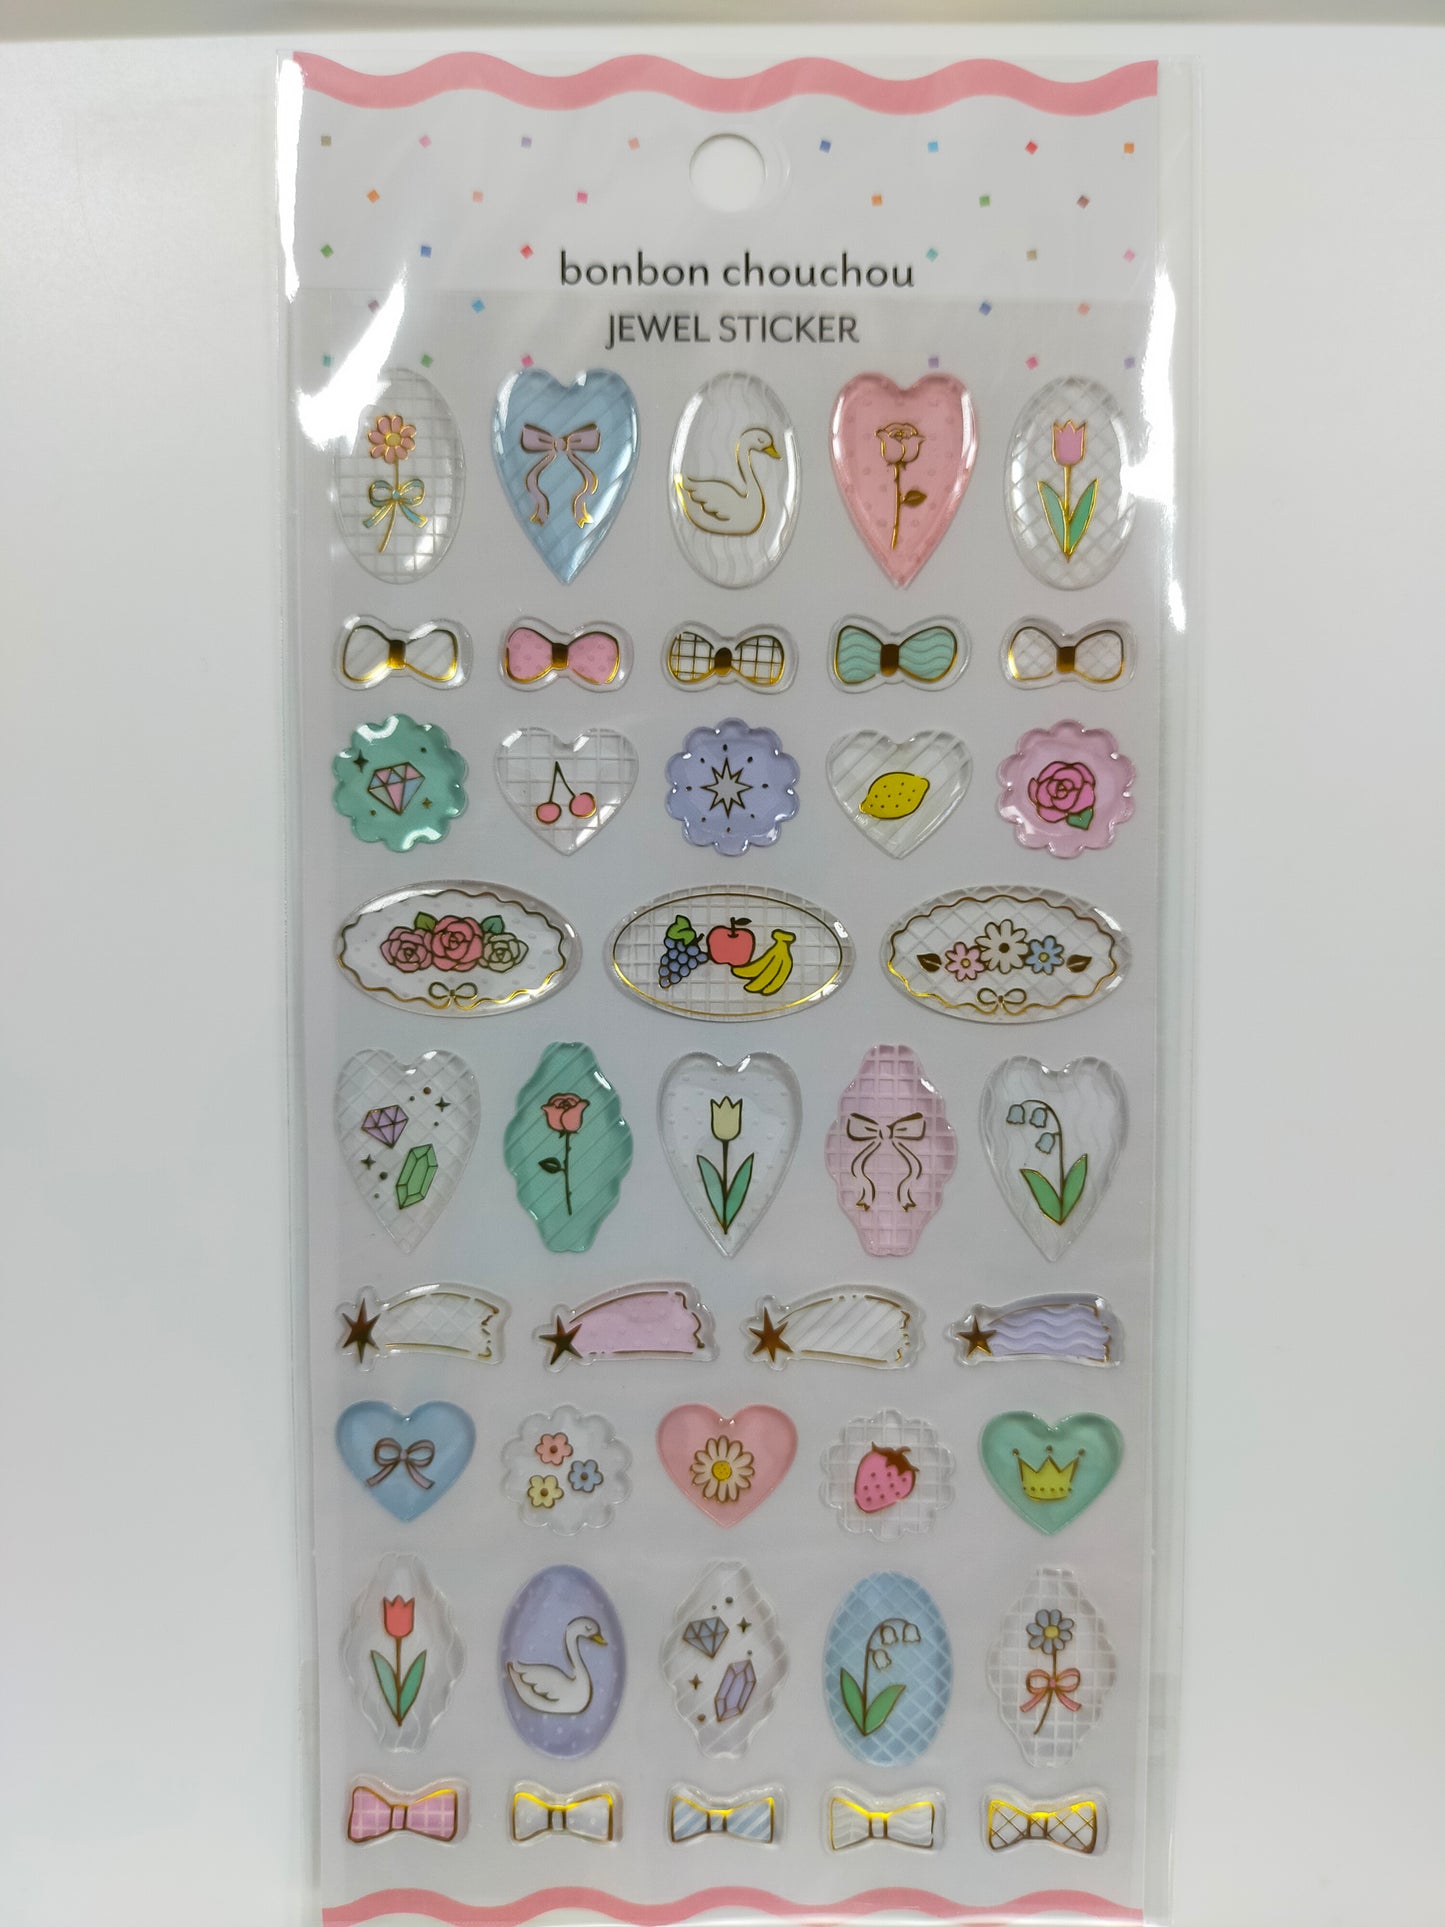 [exclusive]3D Bonbon chouchou jewel sticker,GAIA_Colorful / Sweets / Bird / Button / Letter / Bread / Garden / Sea / Dream / Emotion / Walts / Flowers